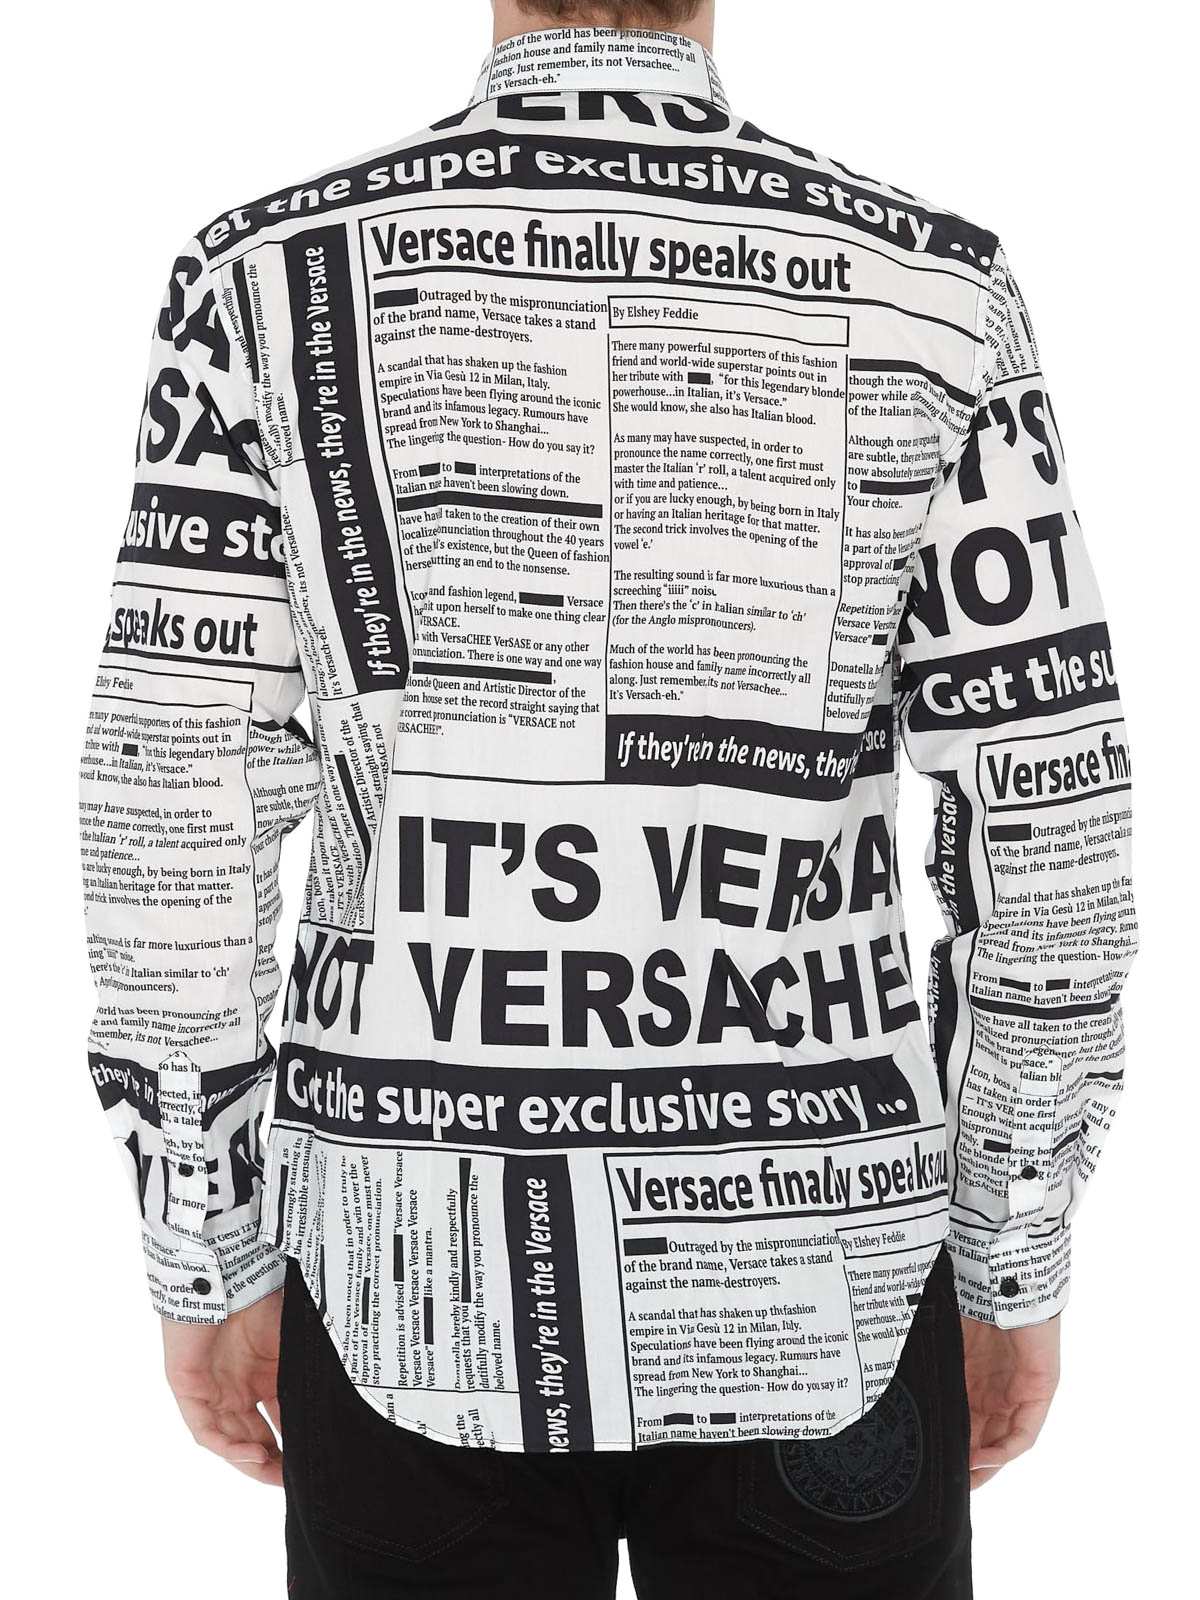 versace brand shirt